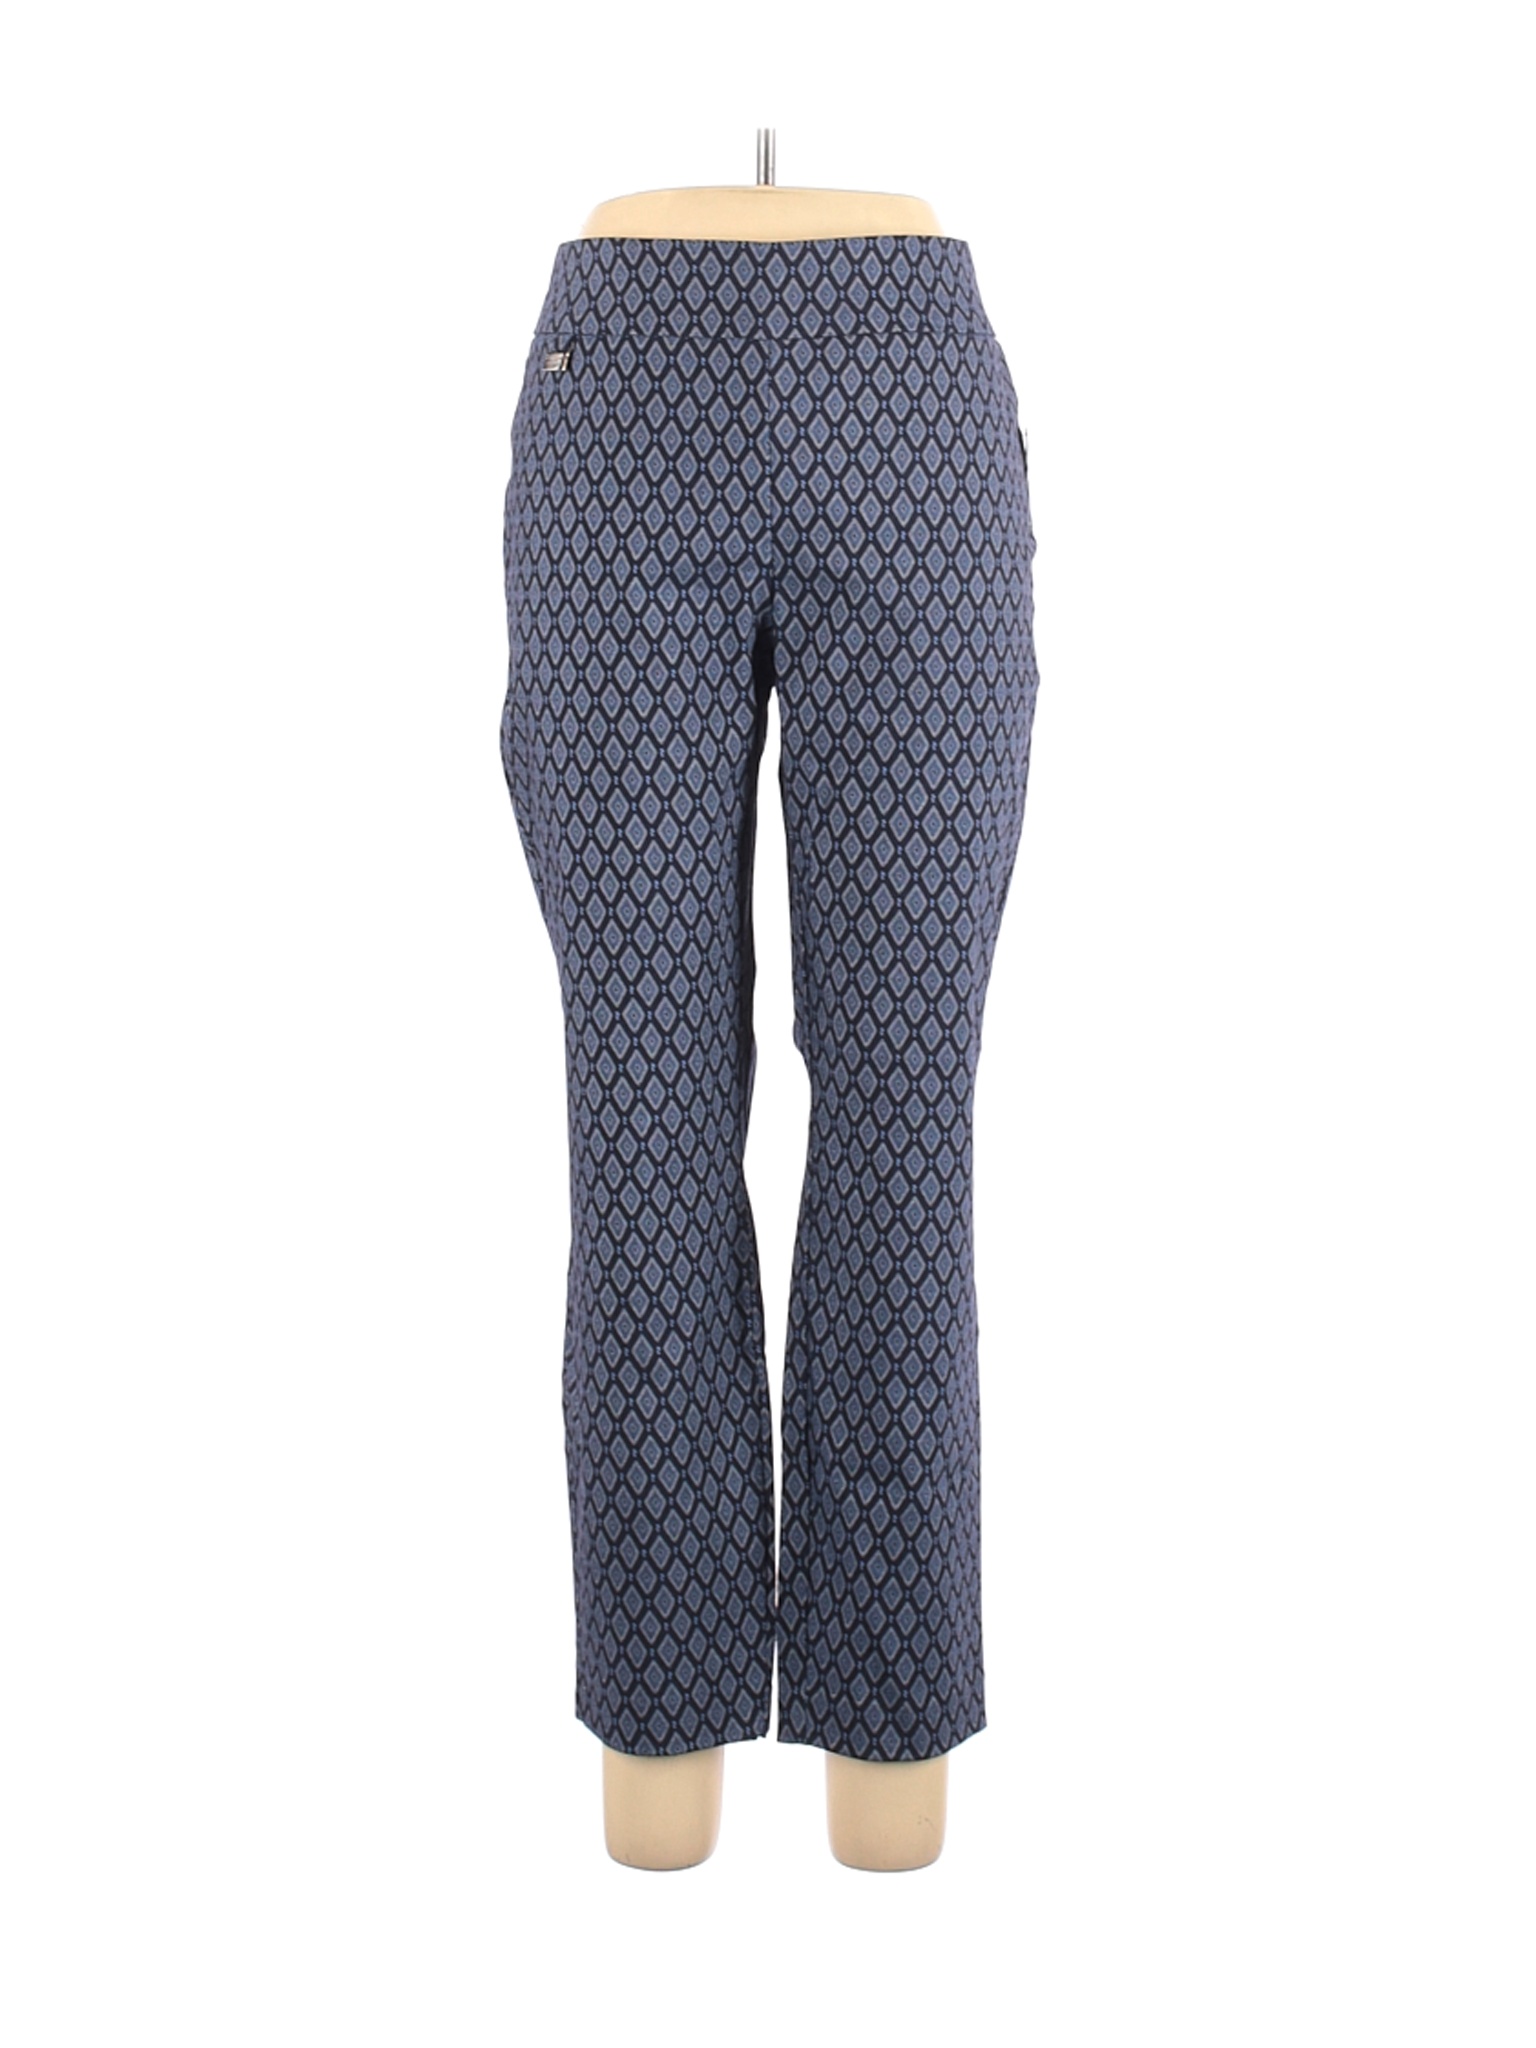 NWT Premise Studio Women Blue Casual Pants L | eBay